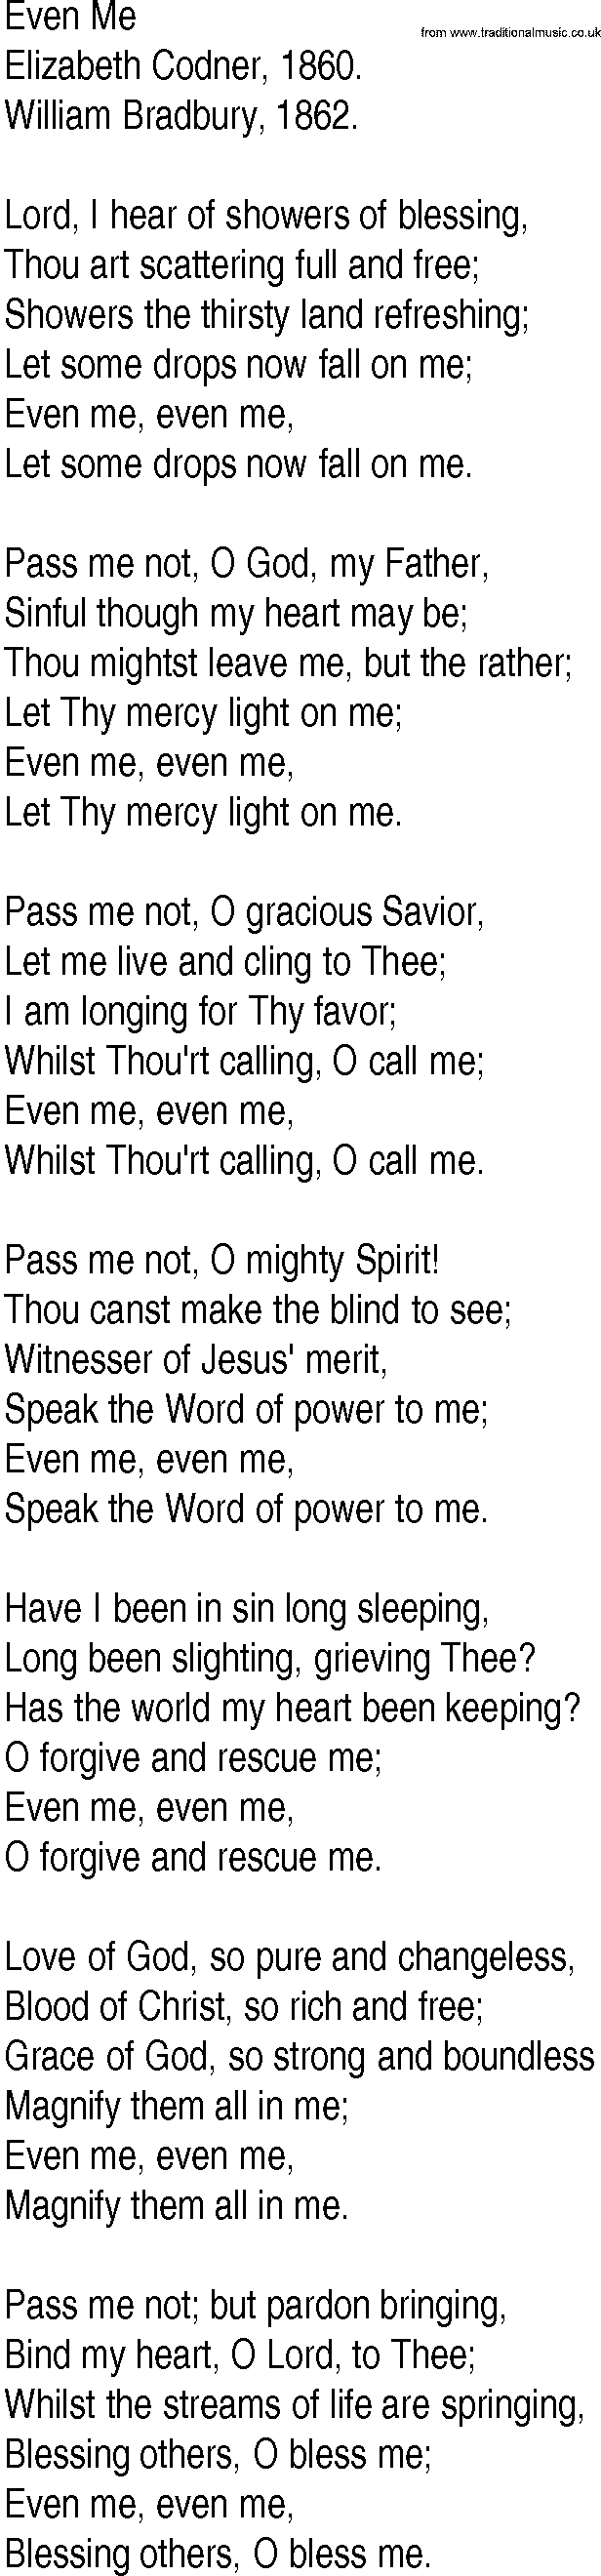 Hymn and Gospel Song: Even Me by Elizabeth Codner lyrics